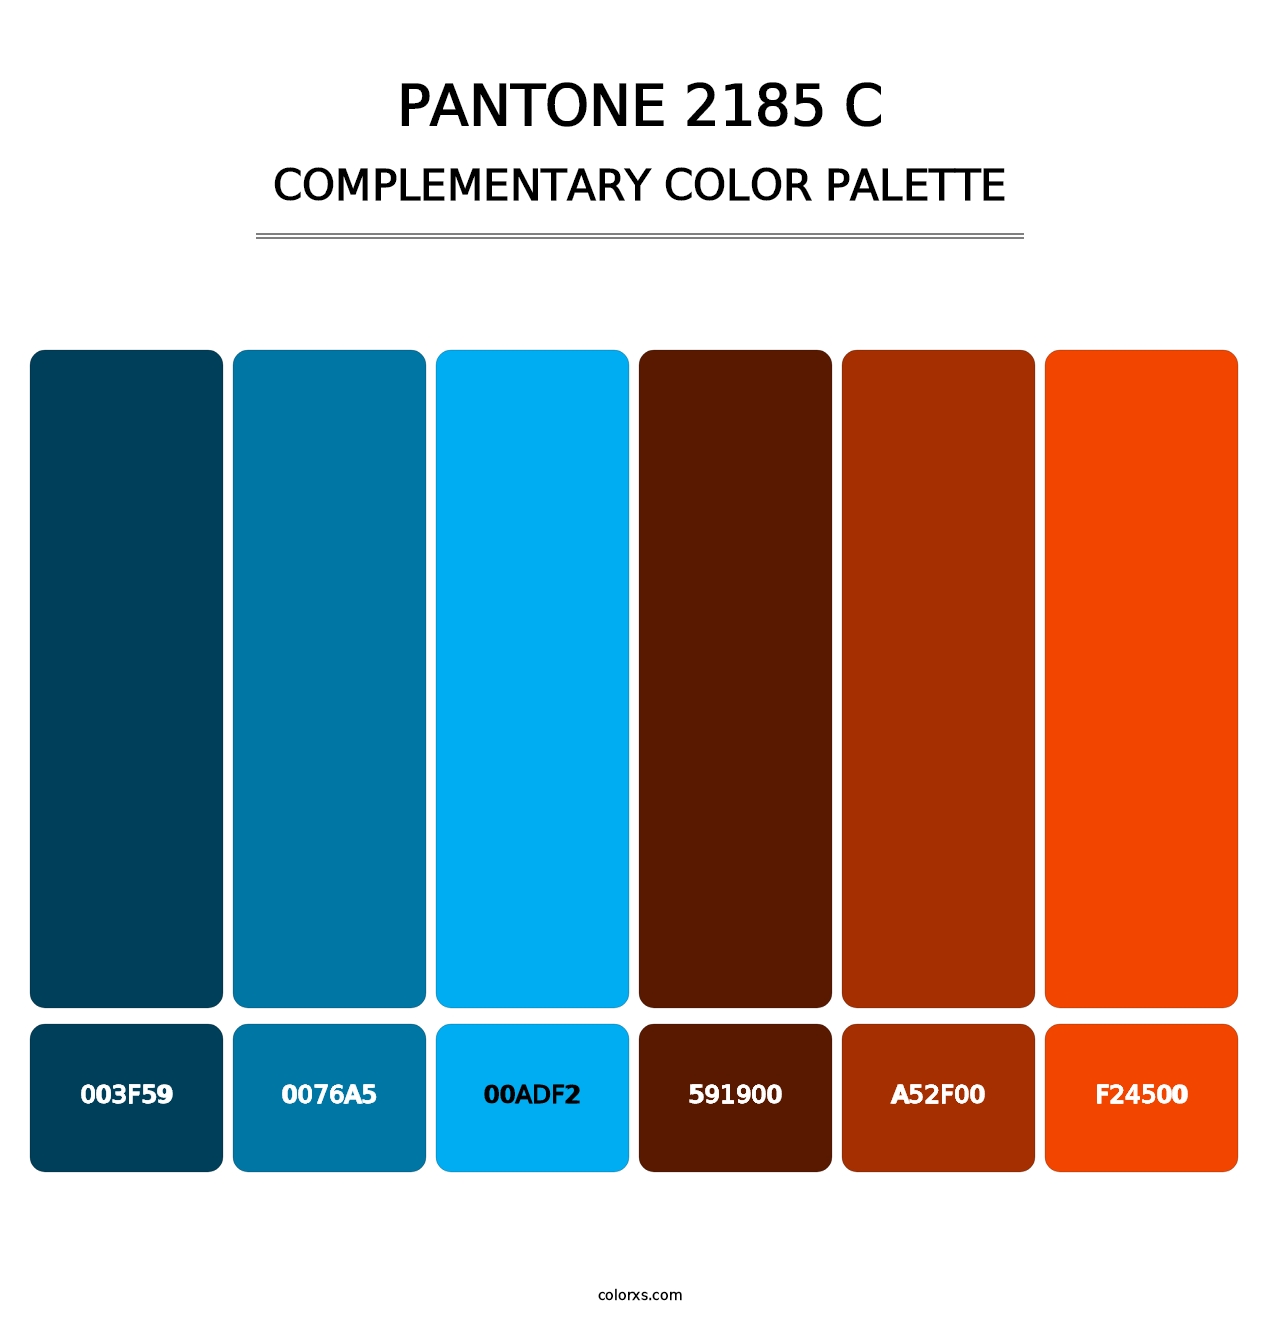 PANTONE 2185 C - Complementary Color Palette